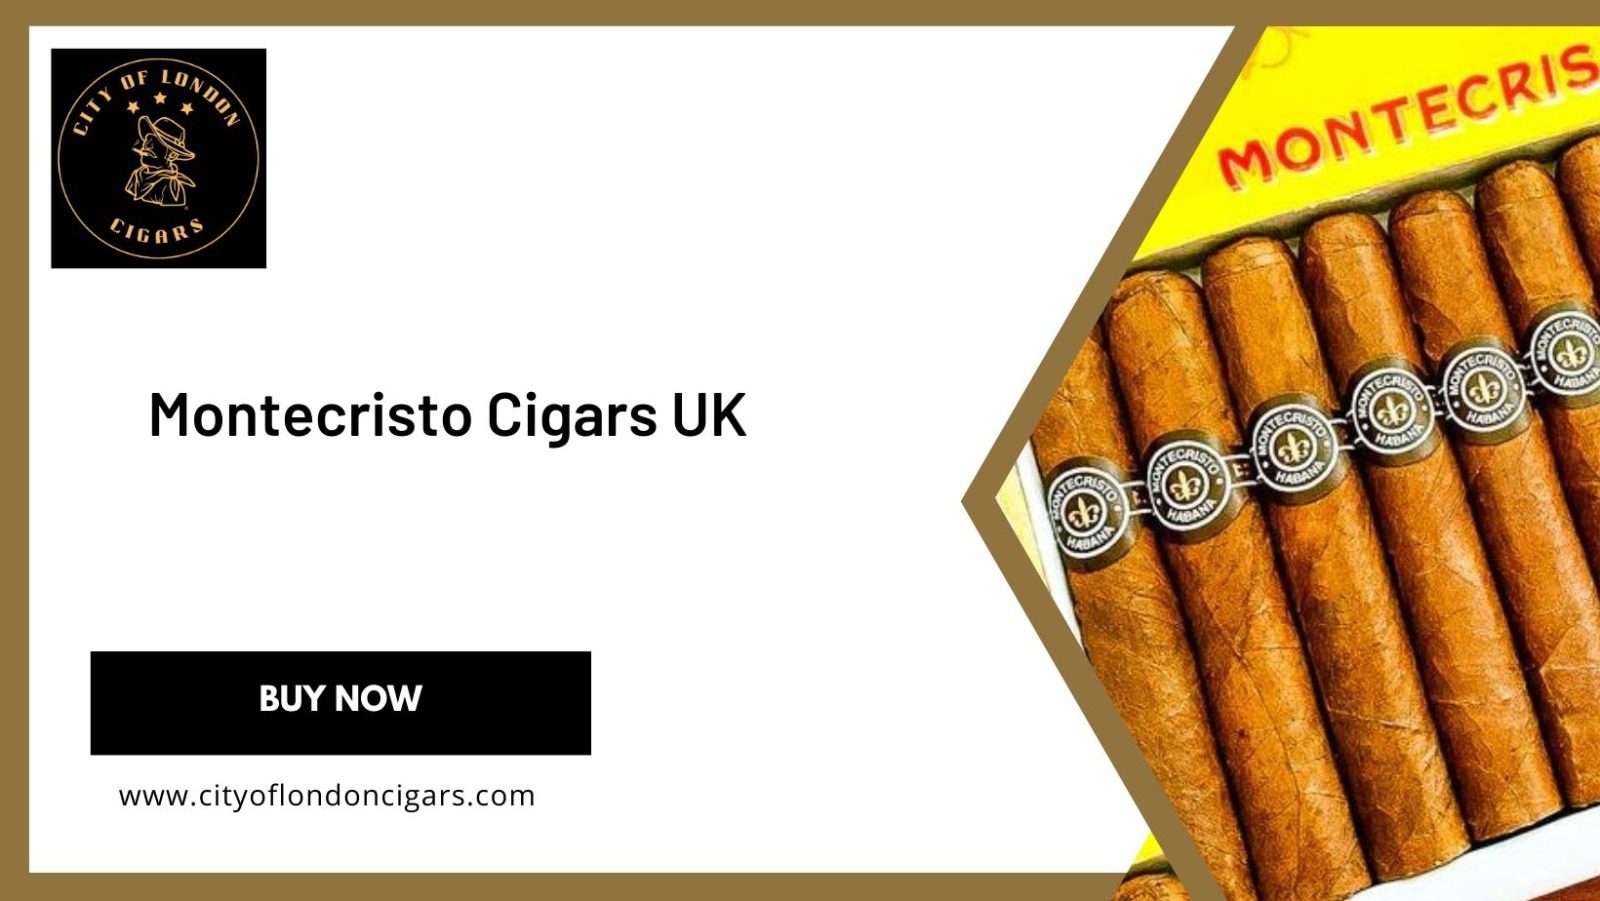 Montecristo Cigars UK